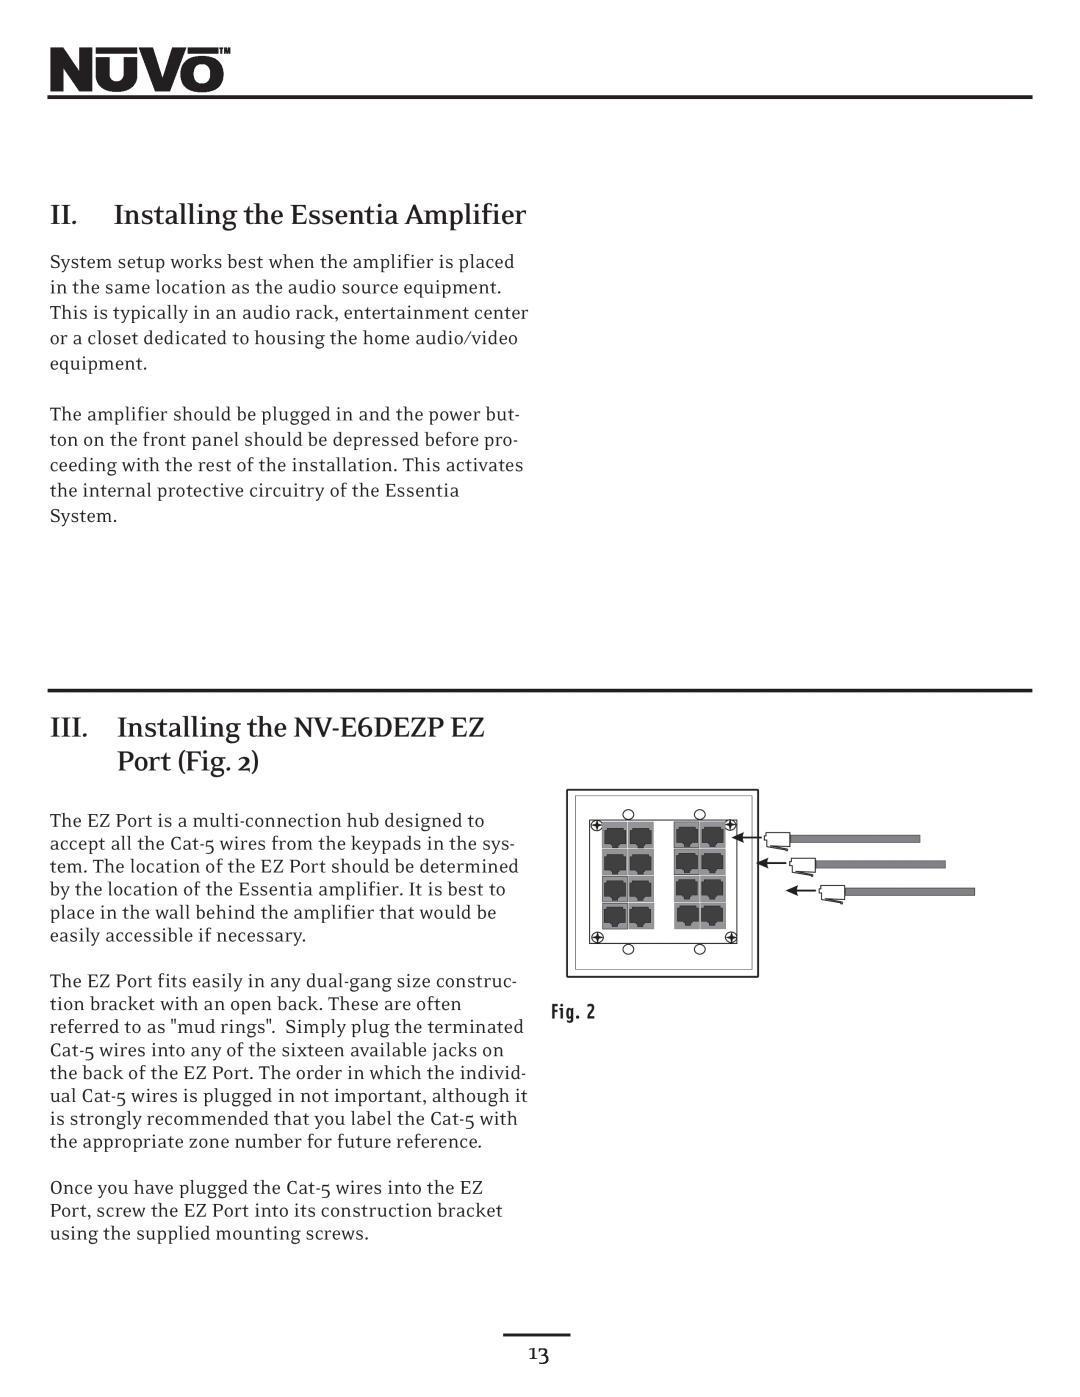 Nuvo NV-E6DMS, NV-E6DXS owner manual II.Installing the Essentia Amplifier, III.Installing the NV-E6DEZPEZ Port Fig 